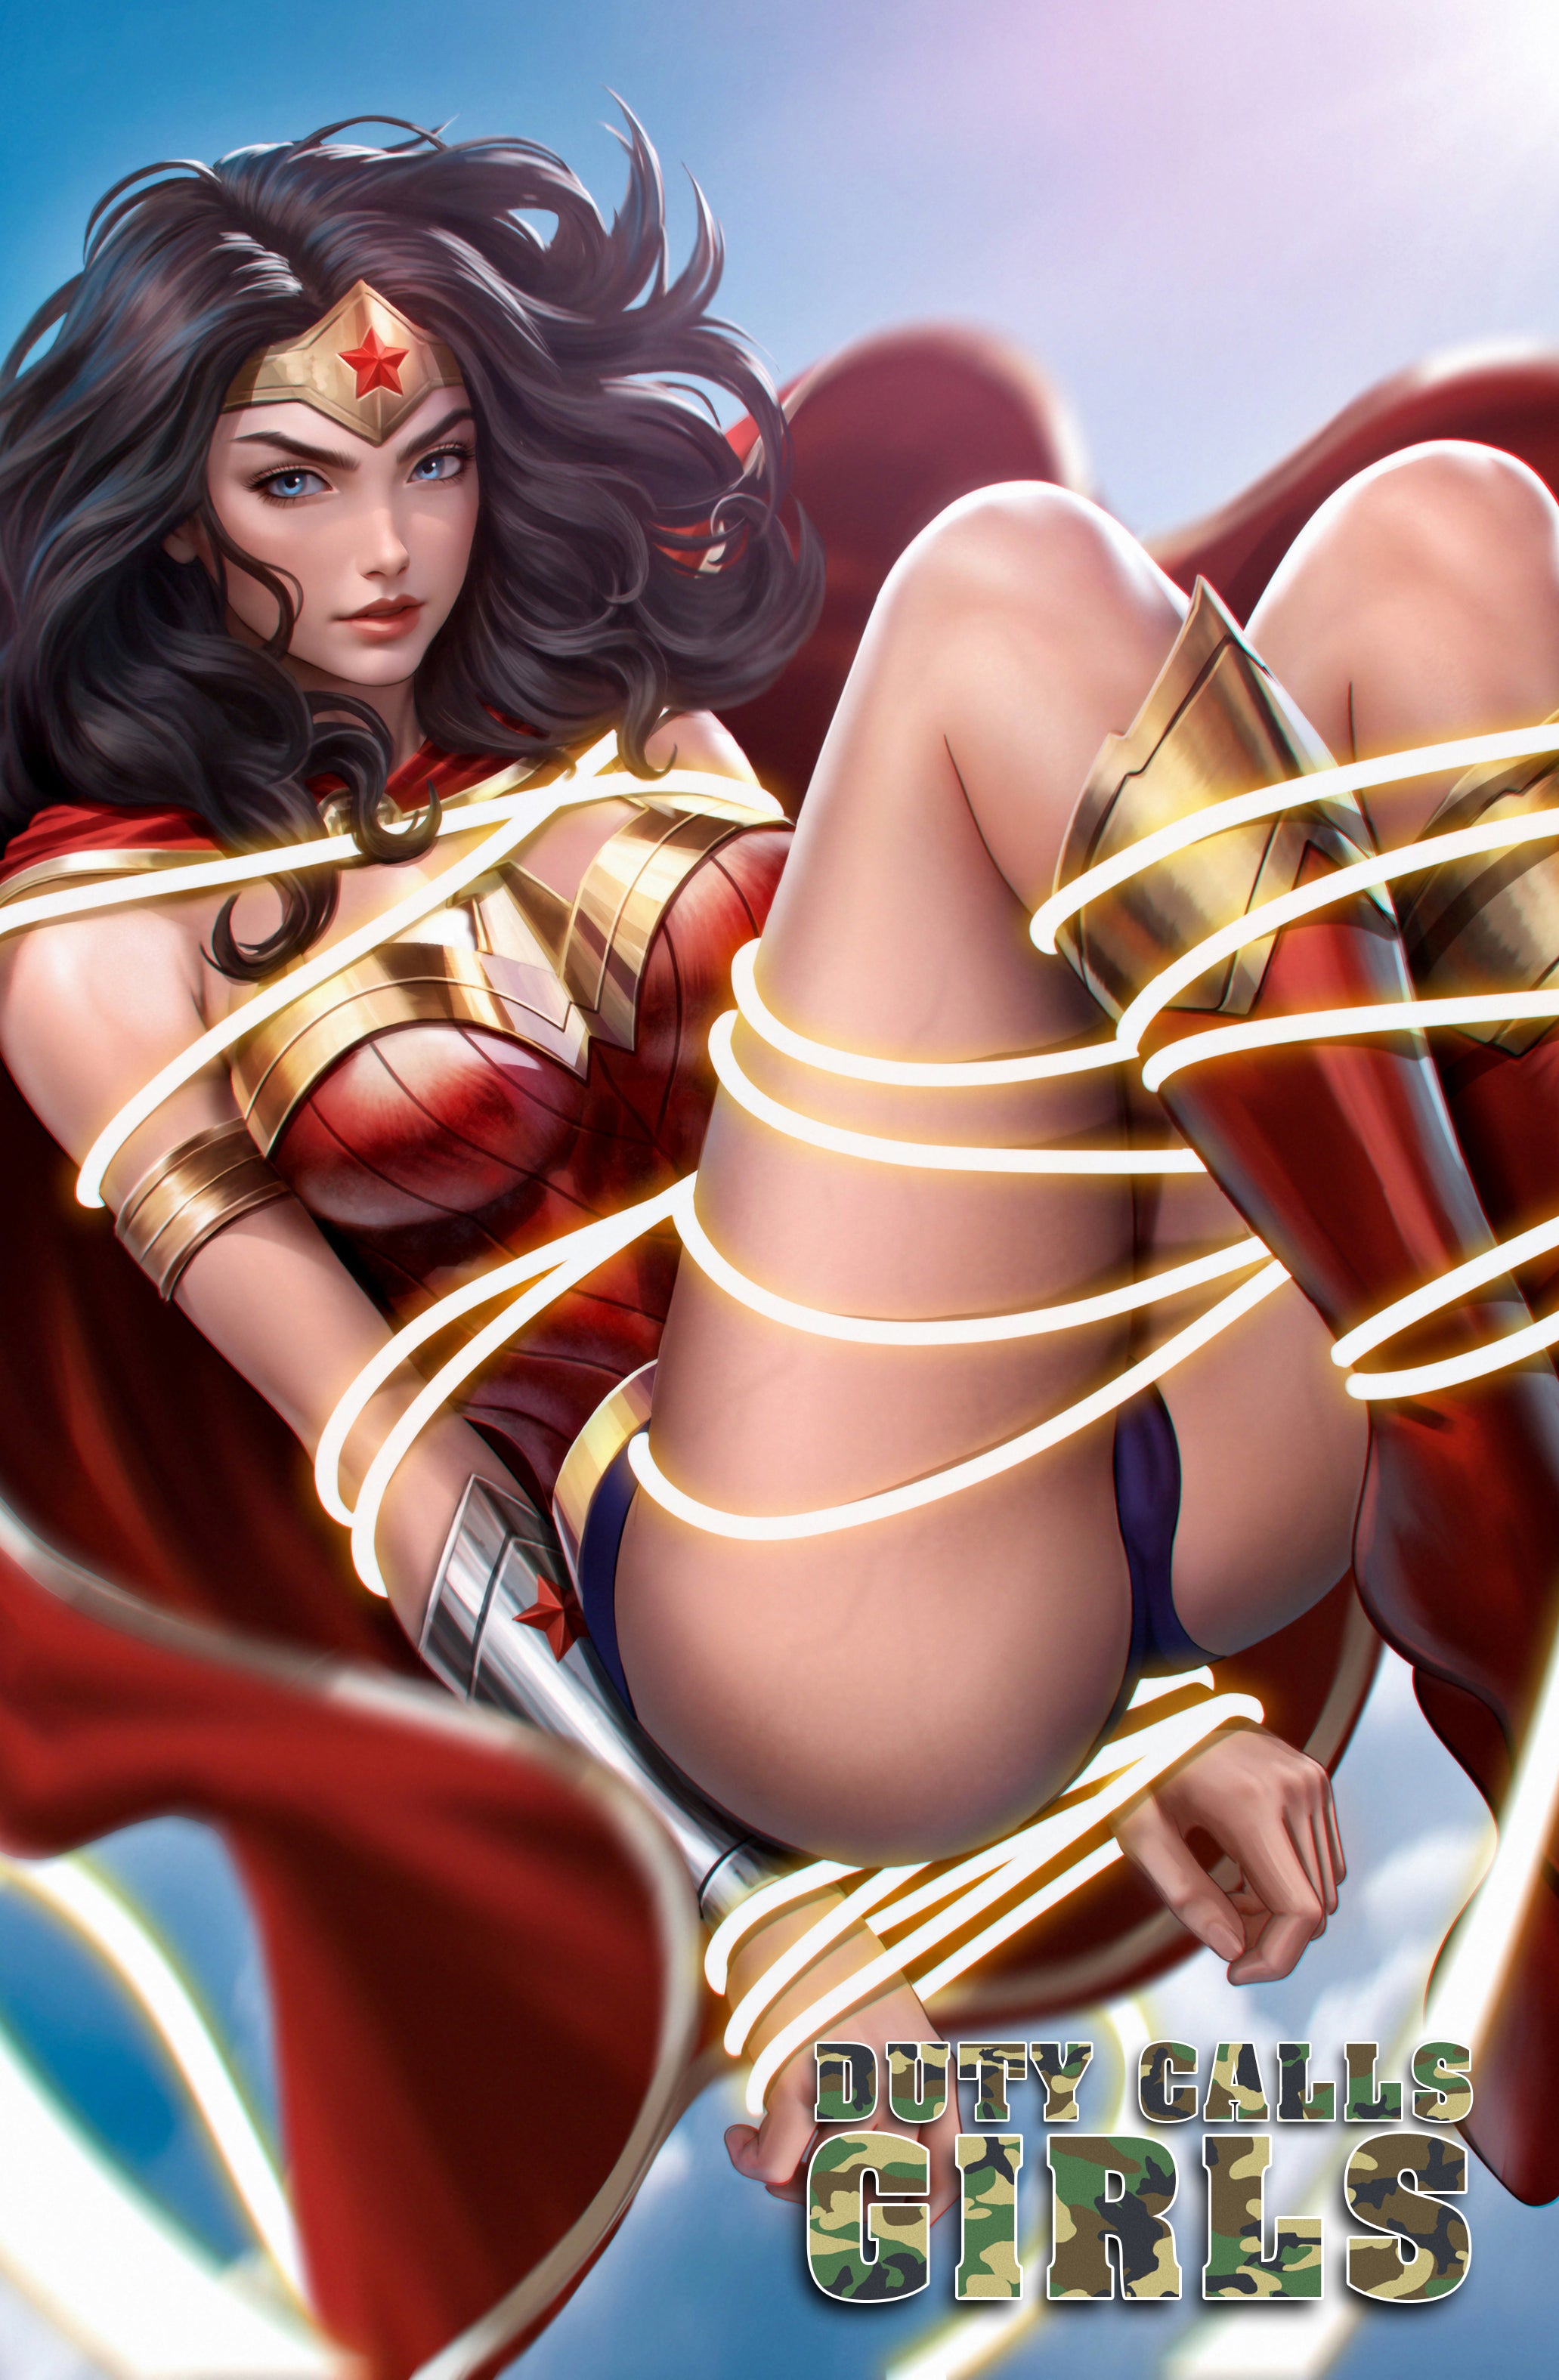 Sexy Wonder Woman Costume - Store